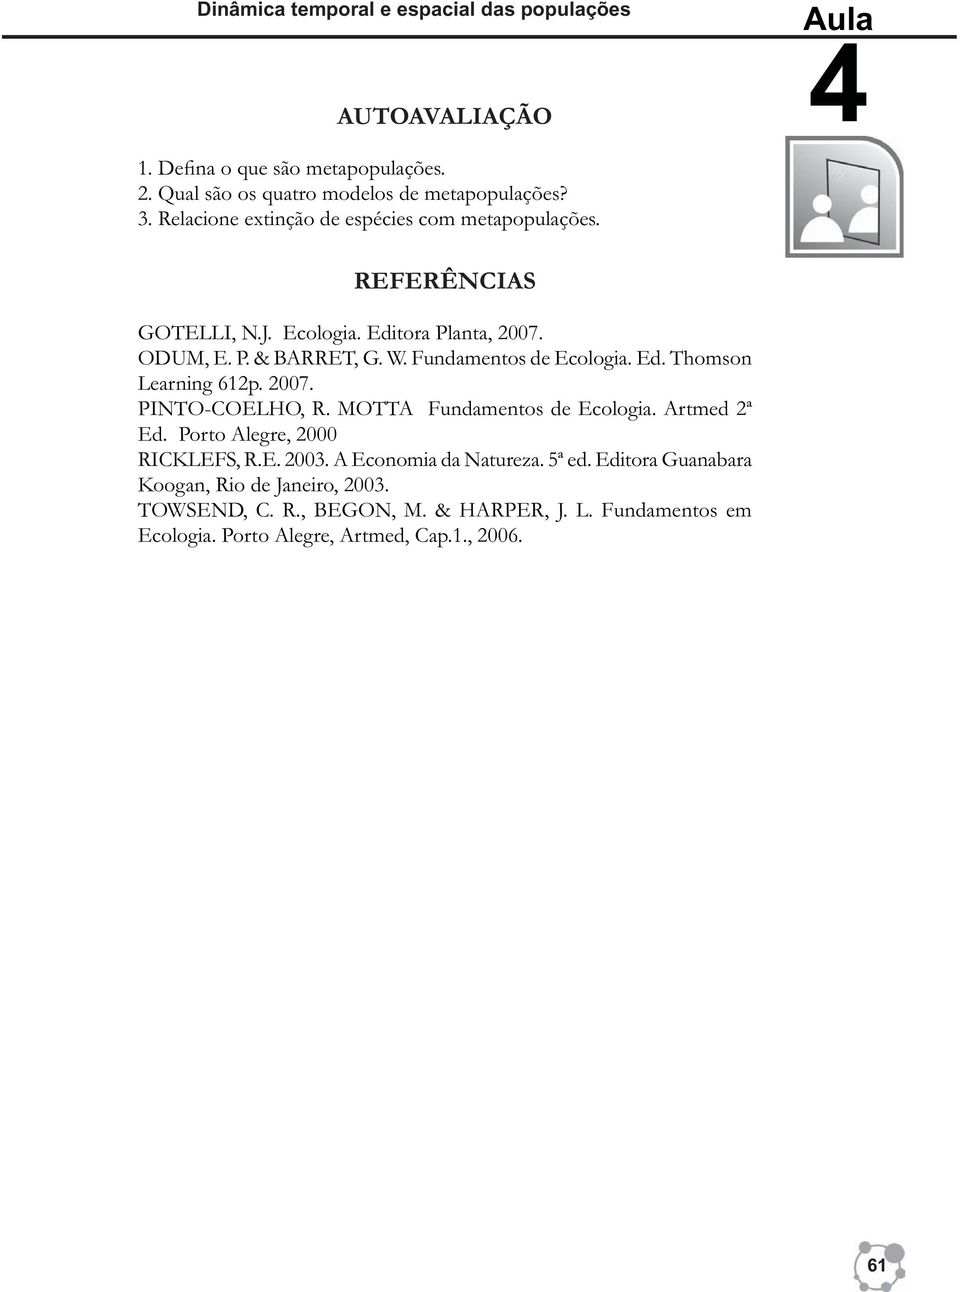 Fundamentos de Ecologia. Ed. Thomson Learning 612p. 2007. PINTO-COELHO, R. MOTTA Fundamentos de Ecologia. Artmed 2ª Ed. Porto Alegre, 2000 RICKLEFS, R.E. 2003.